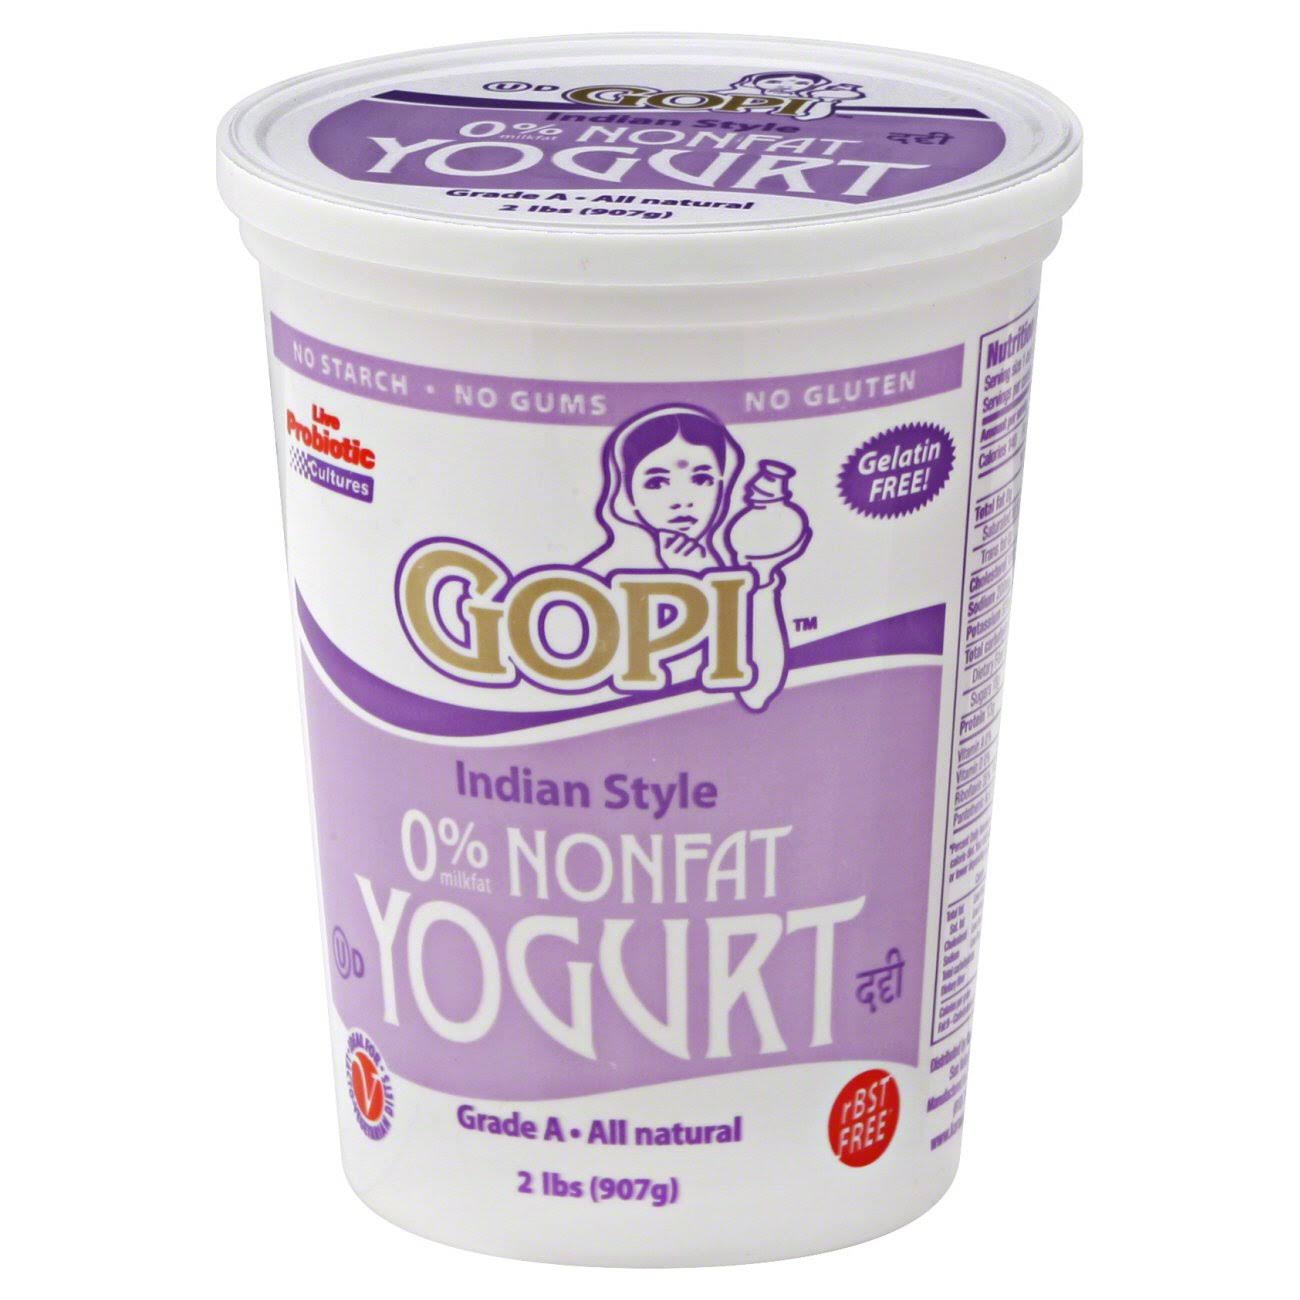 Gopi Indian Style Yogurt - 2lbs